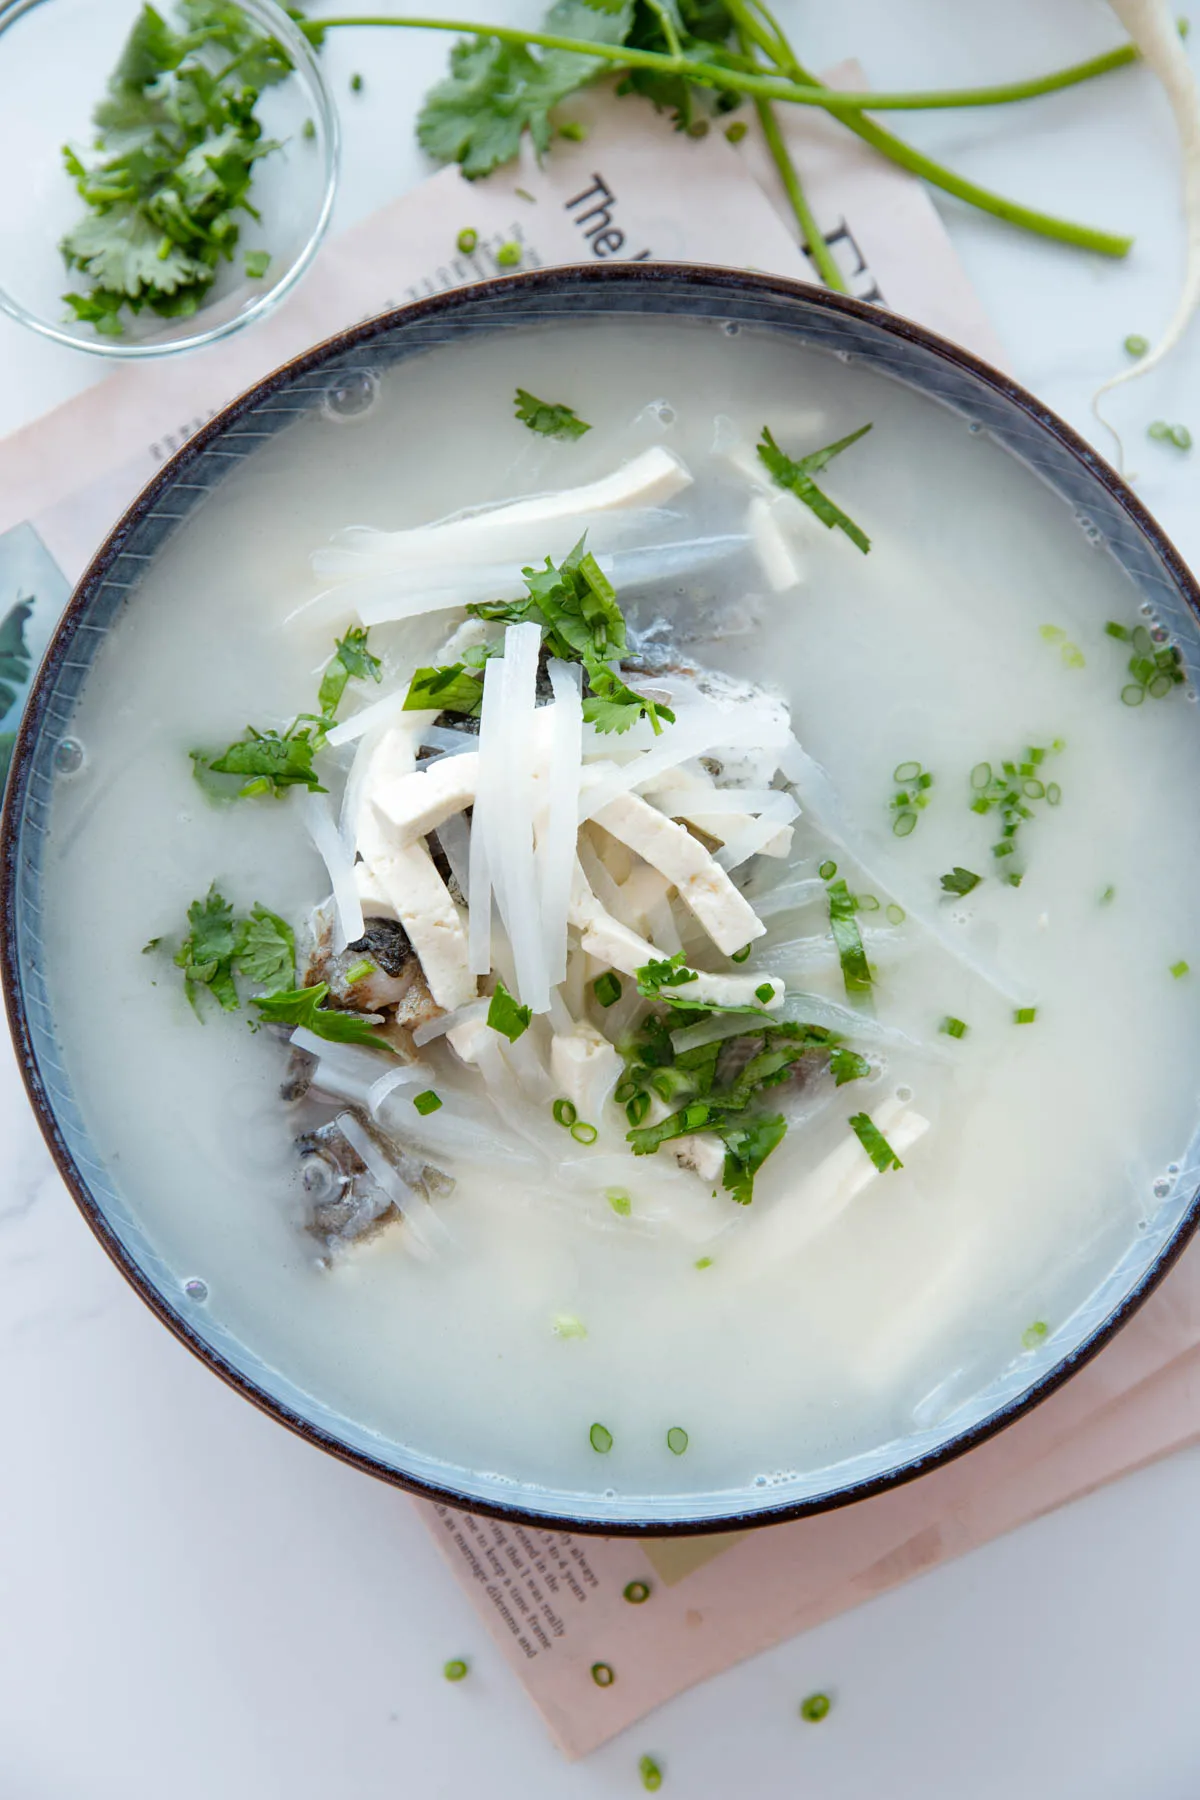 Chinese fish soup|chinasichuanfood.com